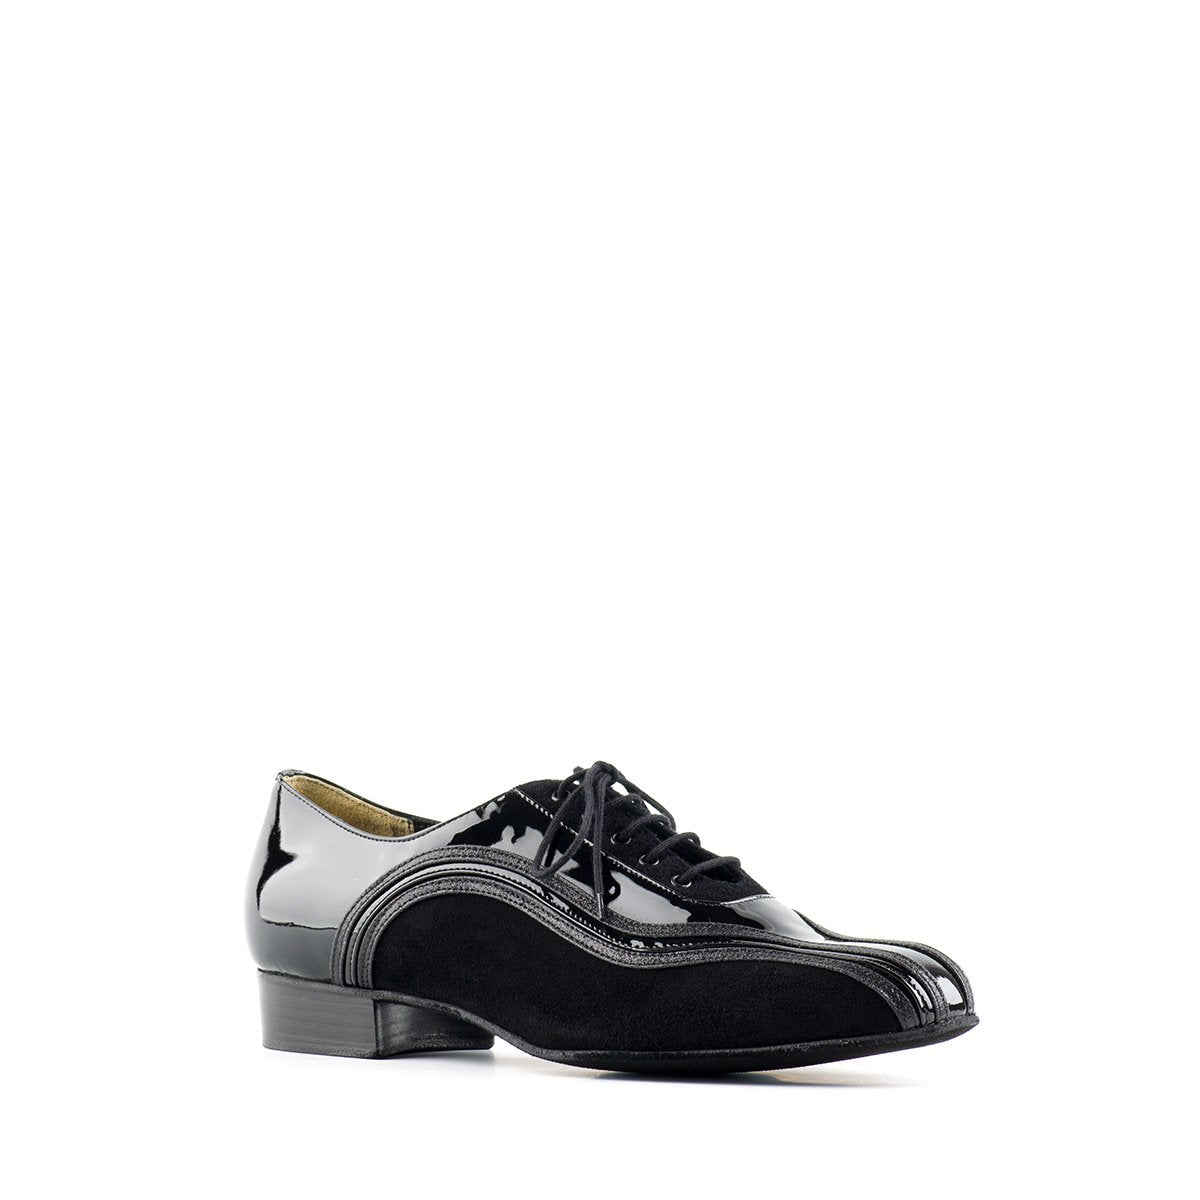 Men's ballroom dance shoe in black patent